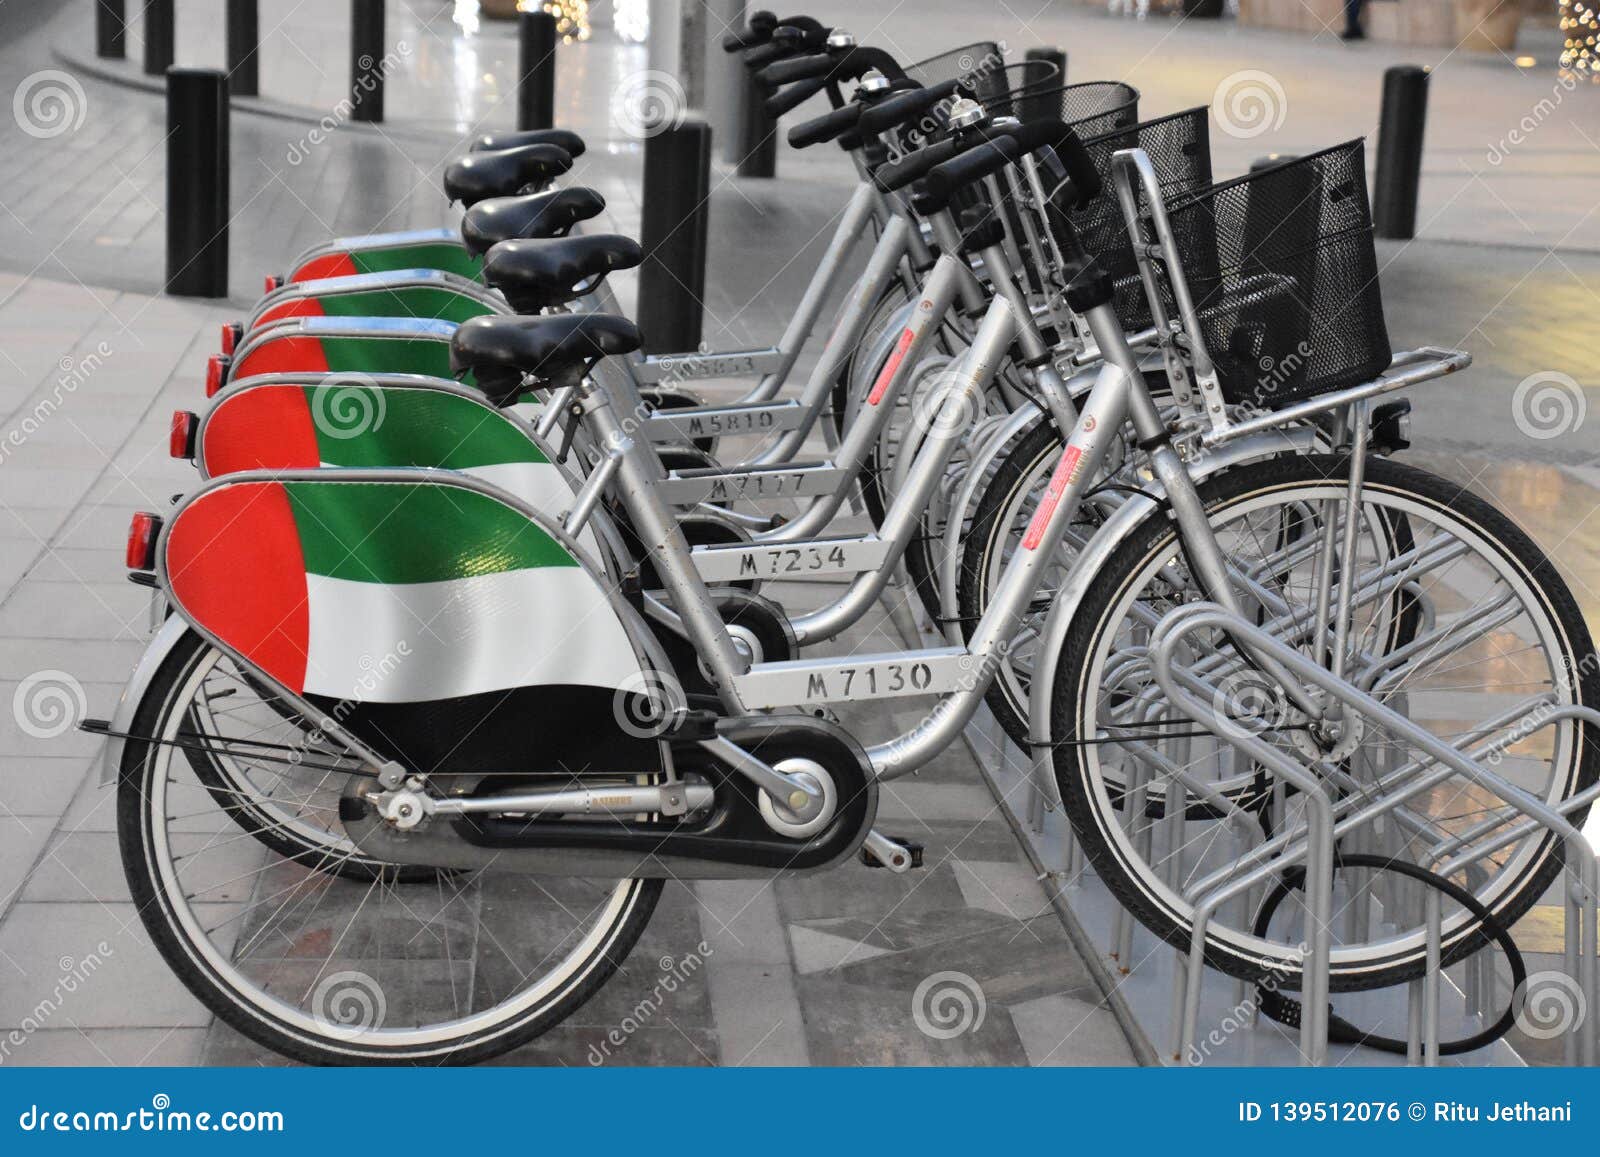 Rental bikes in Dubai, UAE editorial photo. Image of city